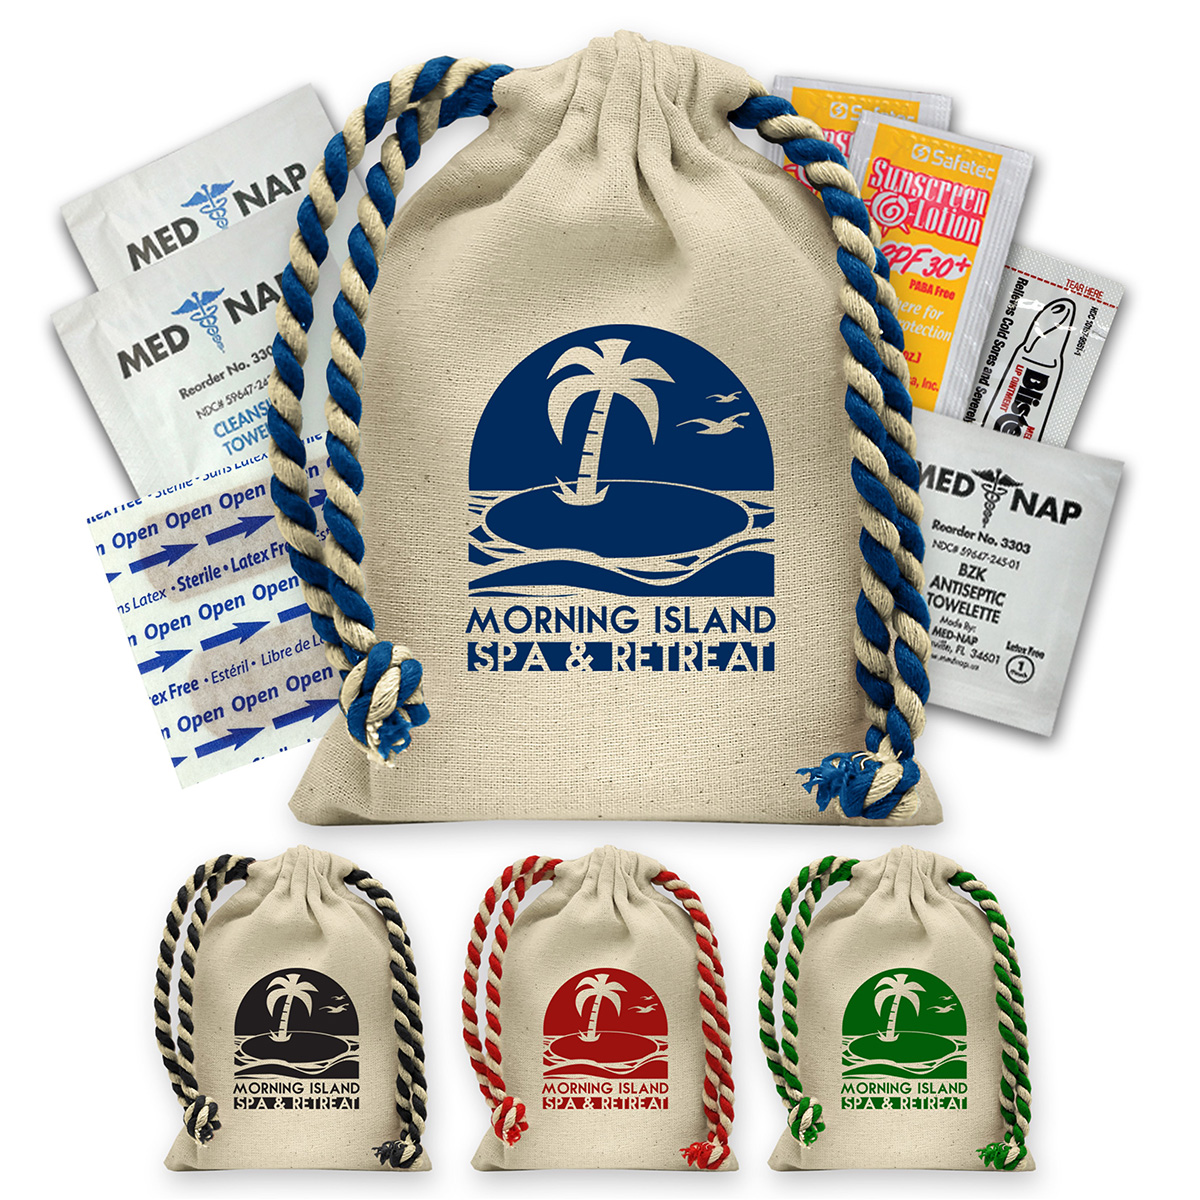 Promotional Sunscreen Kit | Cotton Bag